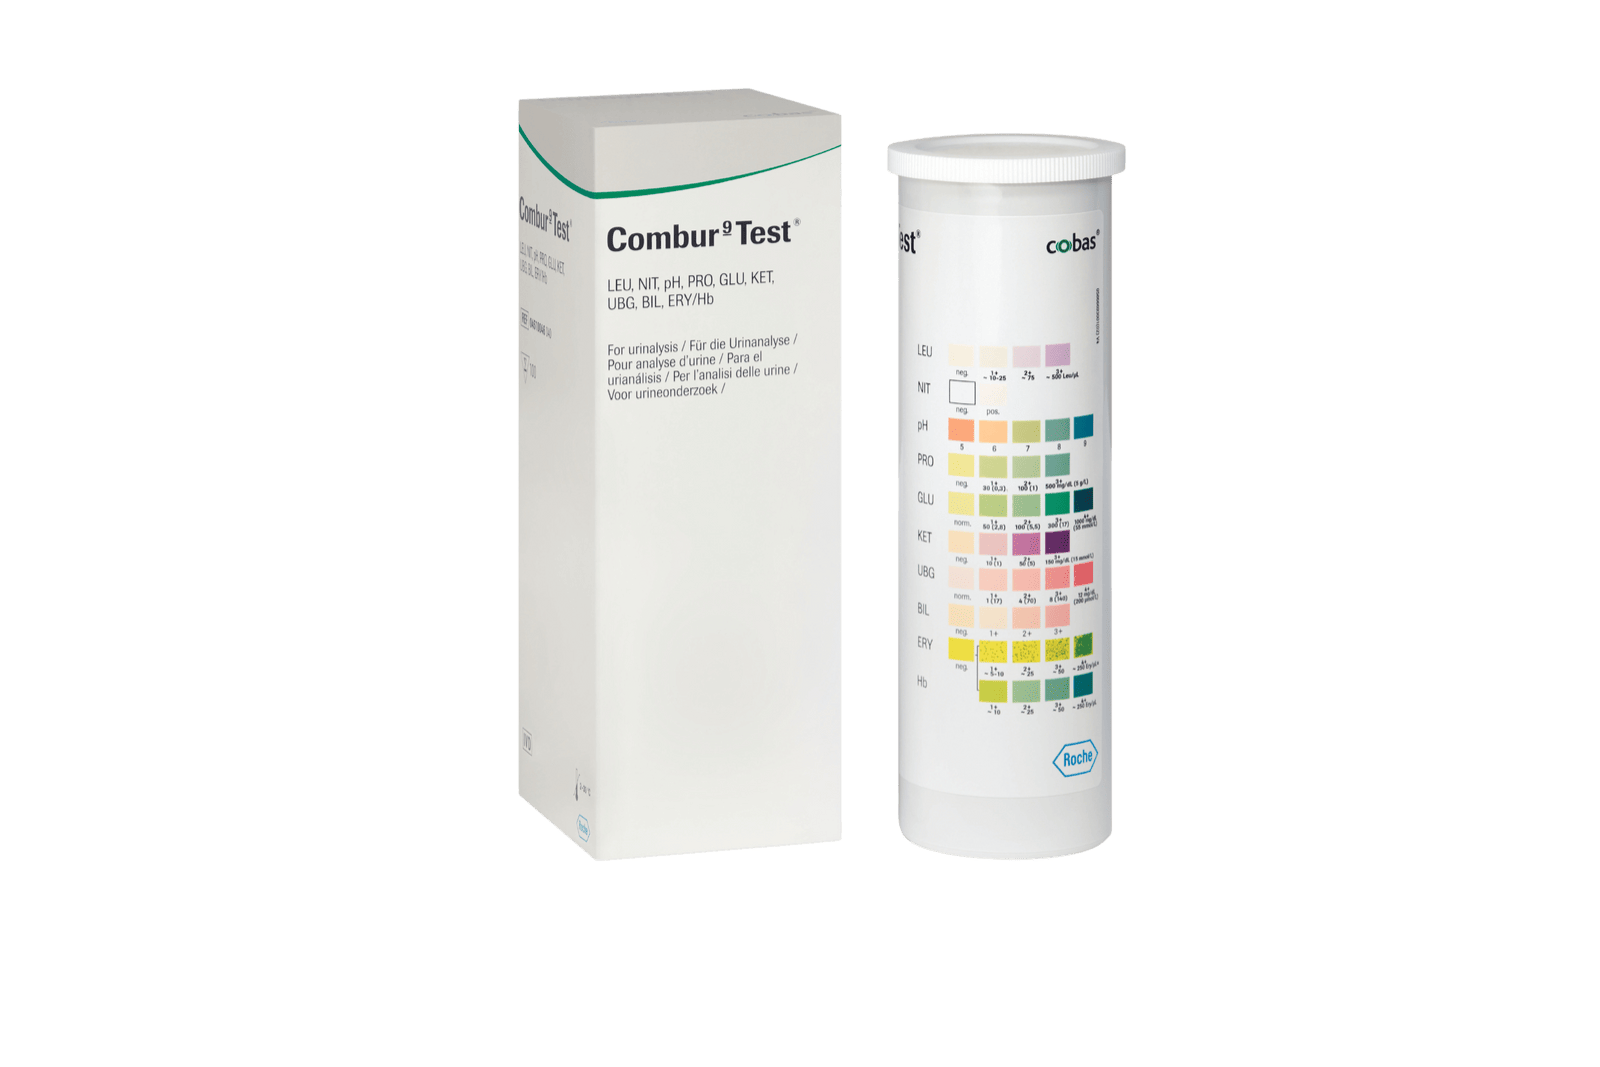 Roche Combur 9 Test Urine Strips Una Health